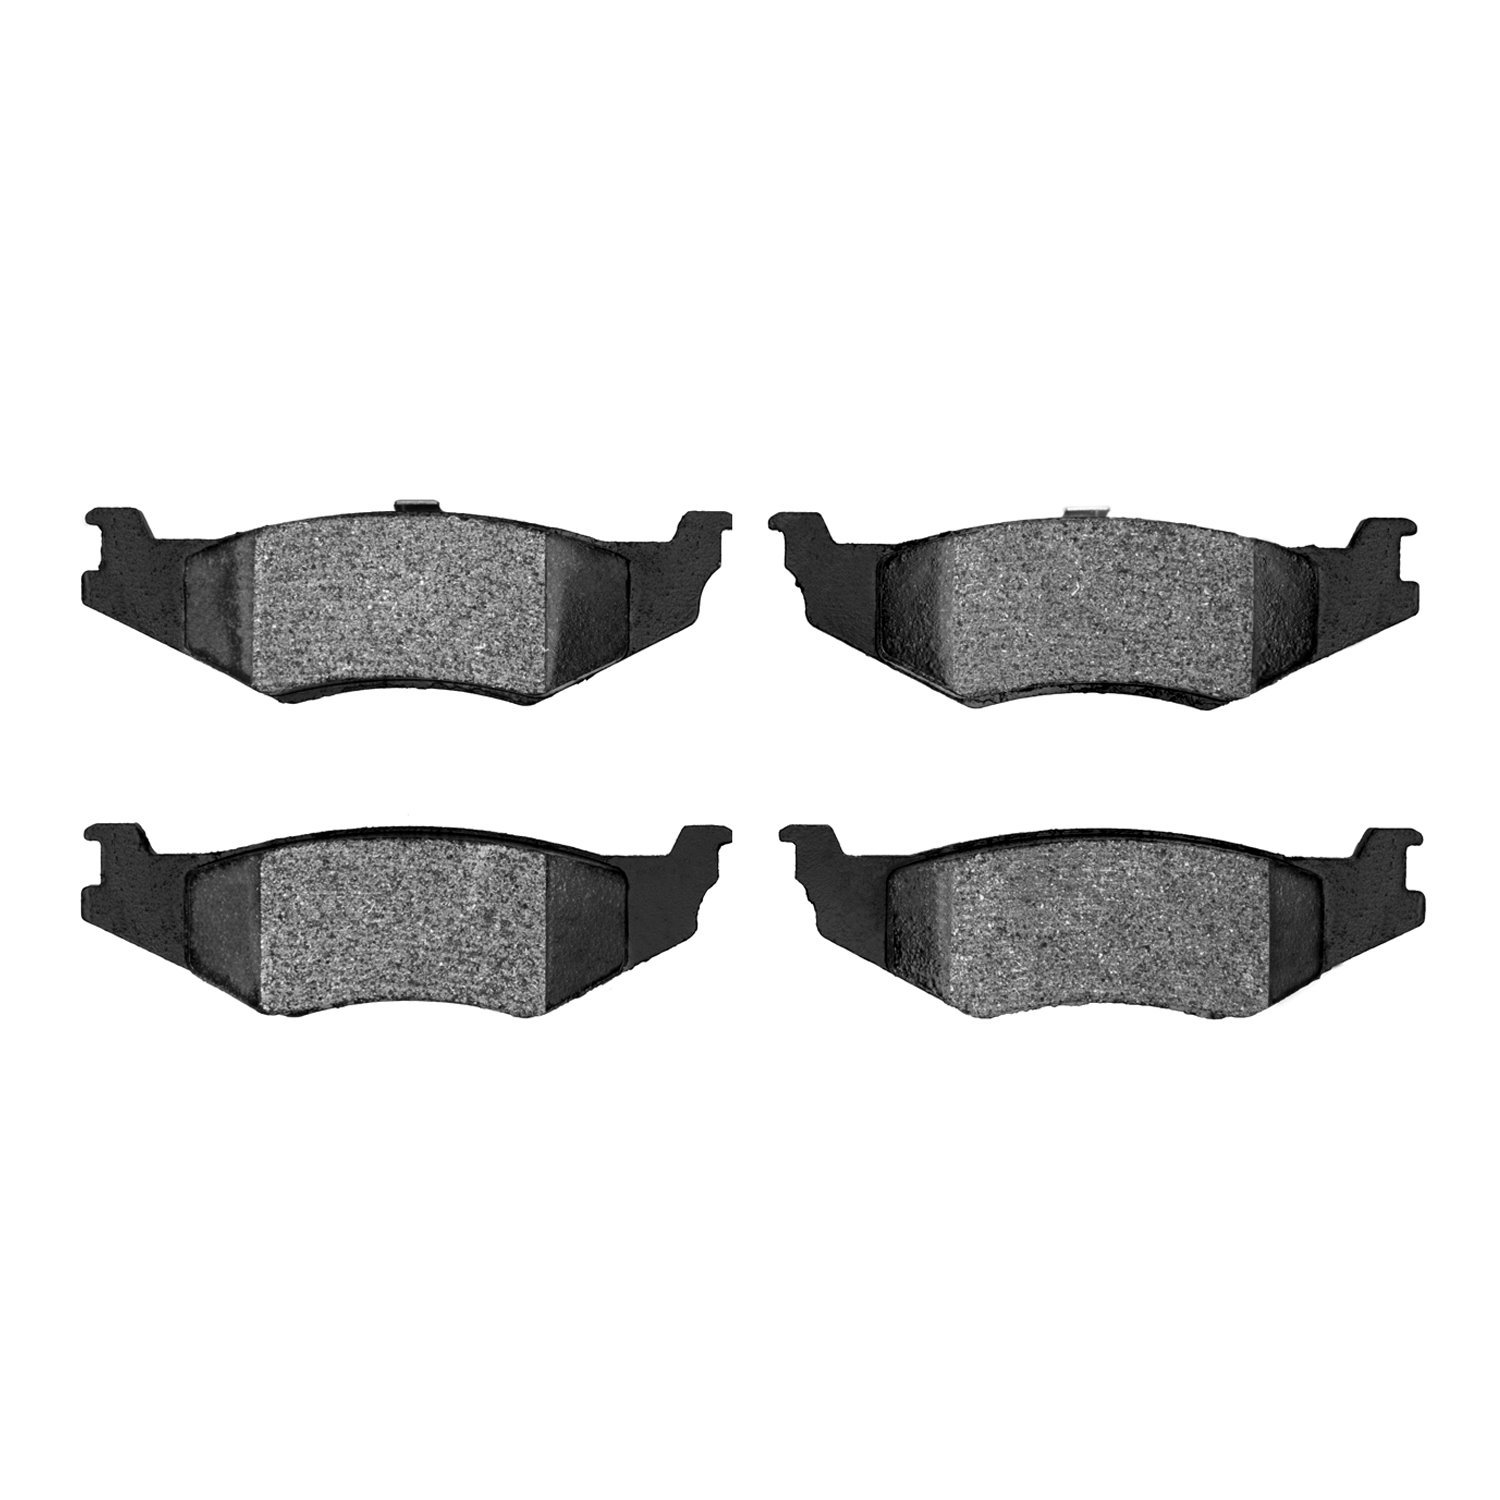 1310-0512-00 3000-Series Ceramic Brake Pads, 1989-2010 Multiple Makes/Models, Position: Rear